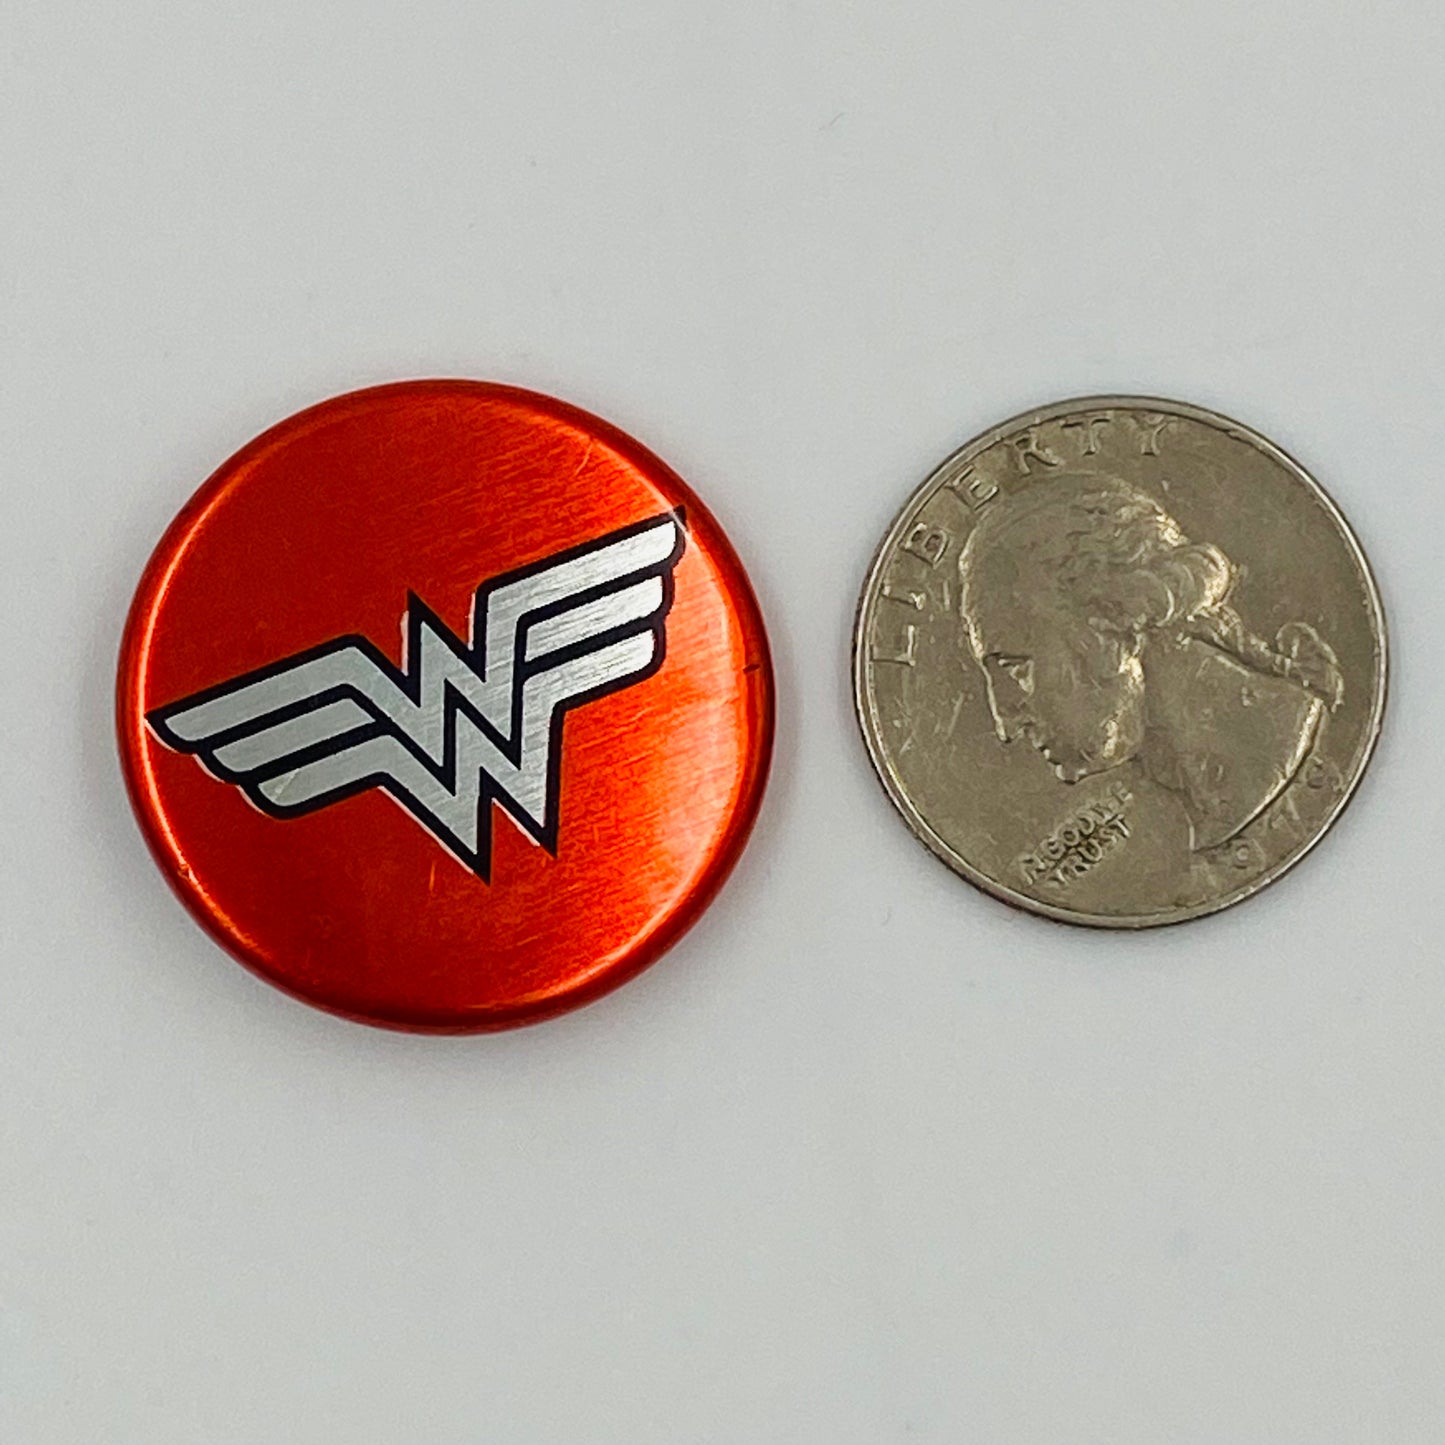 Wonder Woman Symbol pinback button